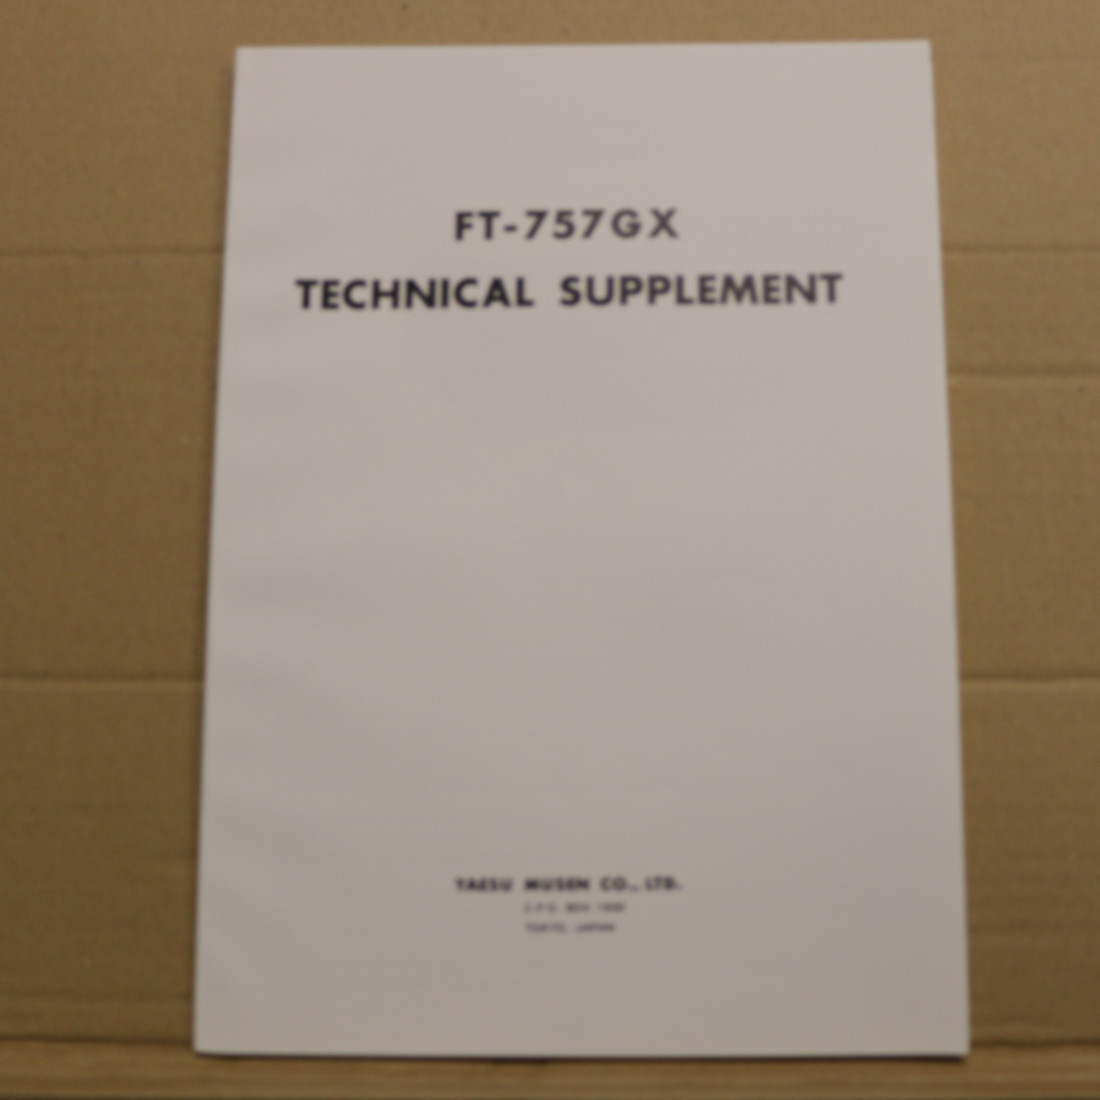 Yaesu FT-757GX Technical Supplement